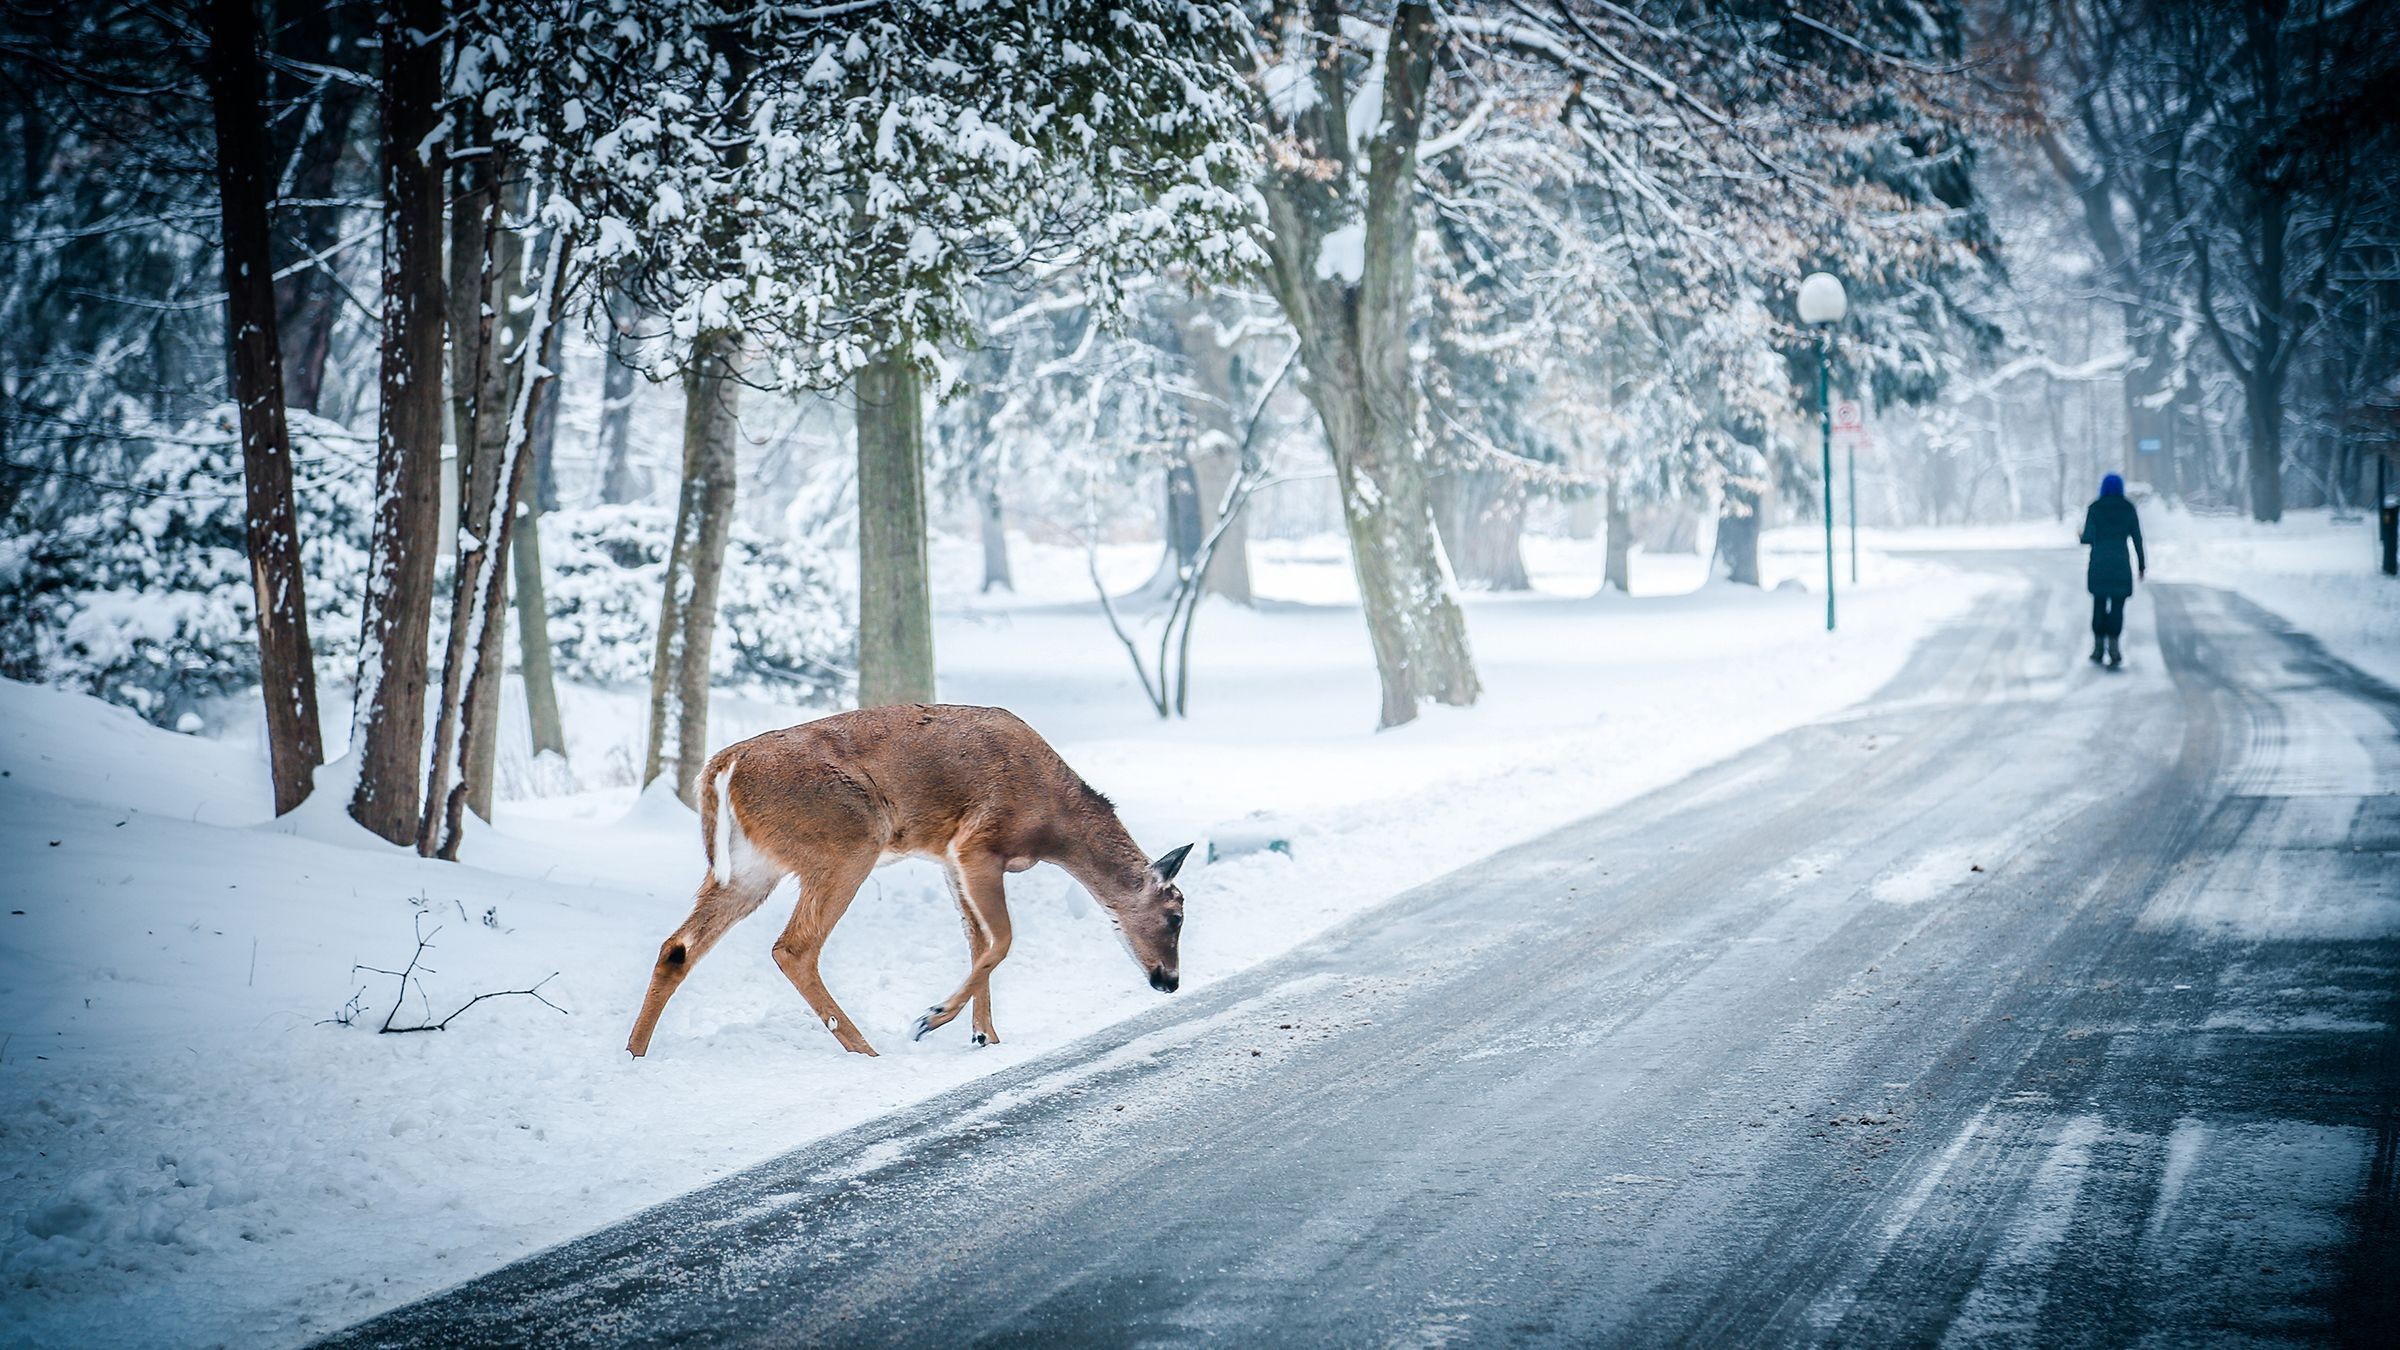 2400x1350 1618x1073 Photography Winter Ice Animals Deer Nature Snow Free Desktop">